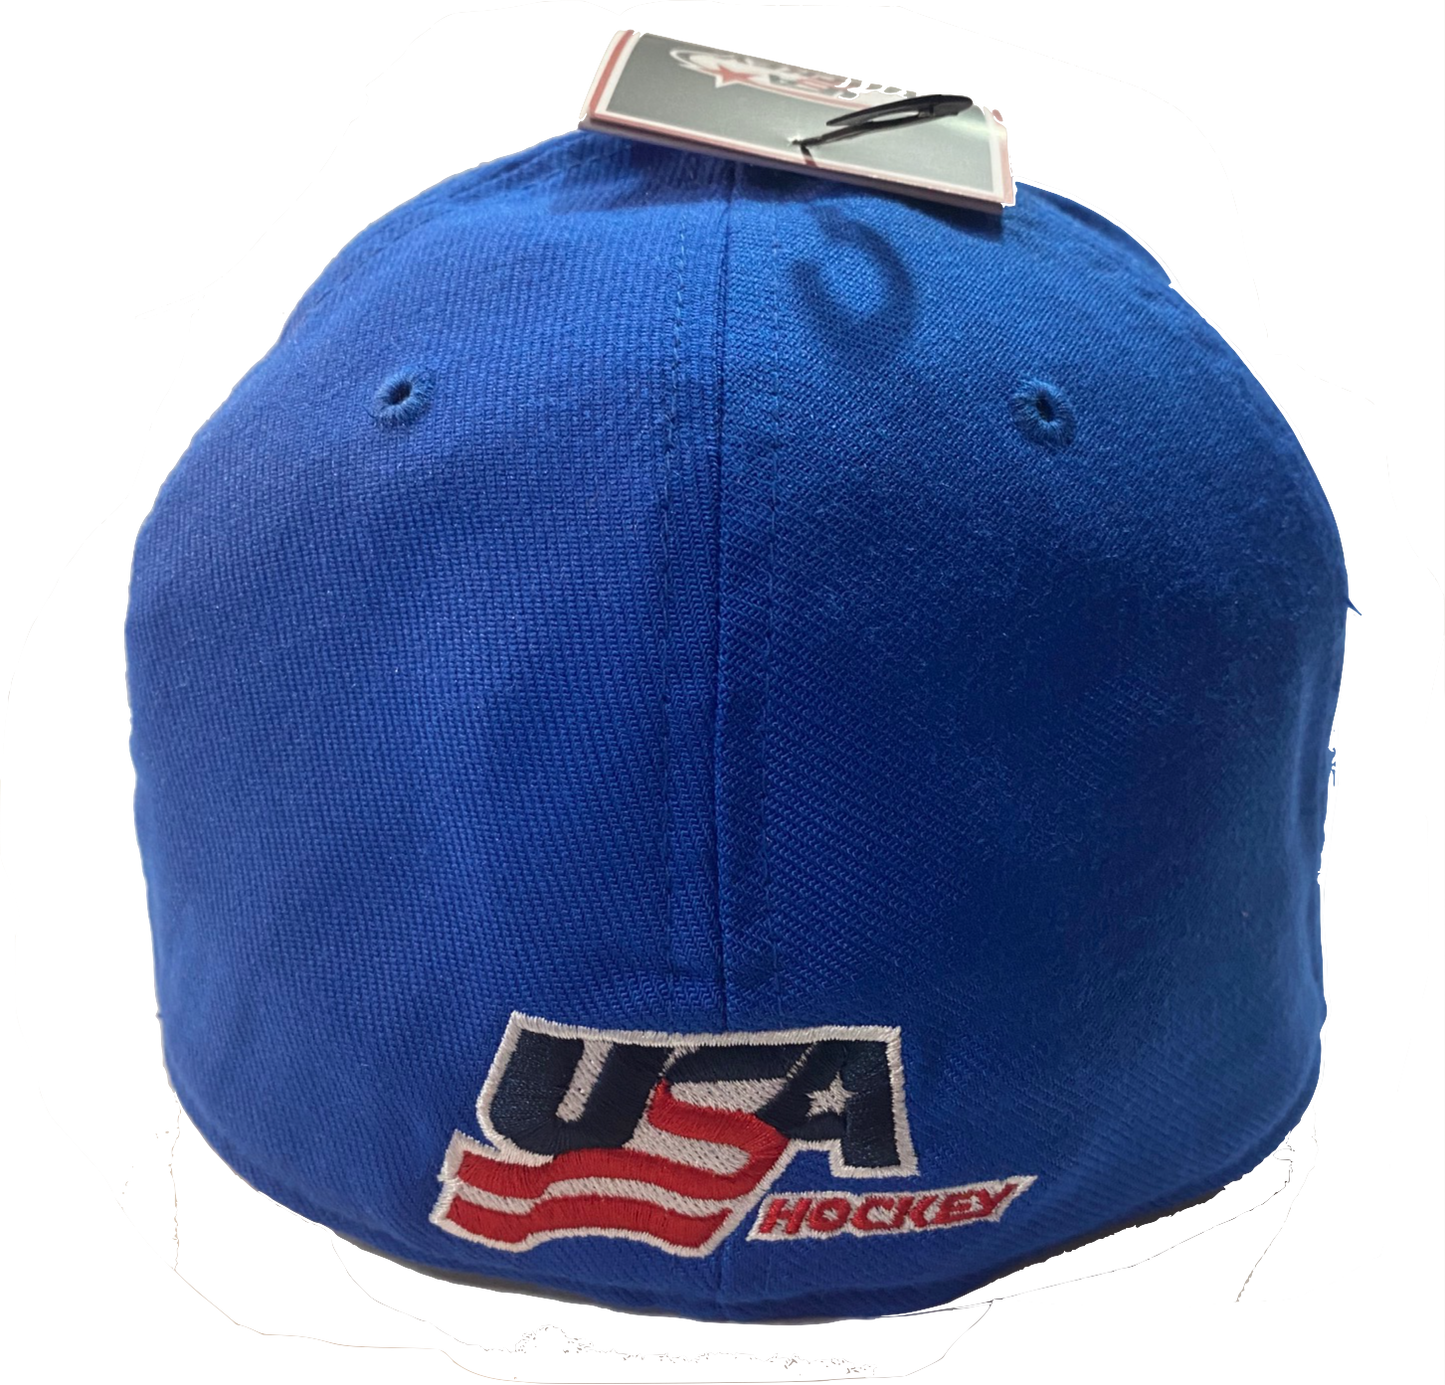 USA Hockey Shield Logo Royal Blue Classic 99 Flex Hat